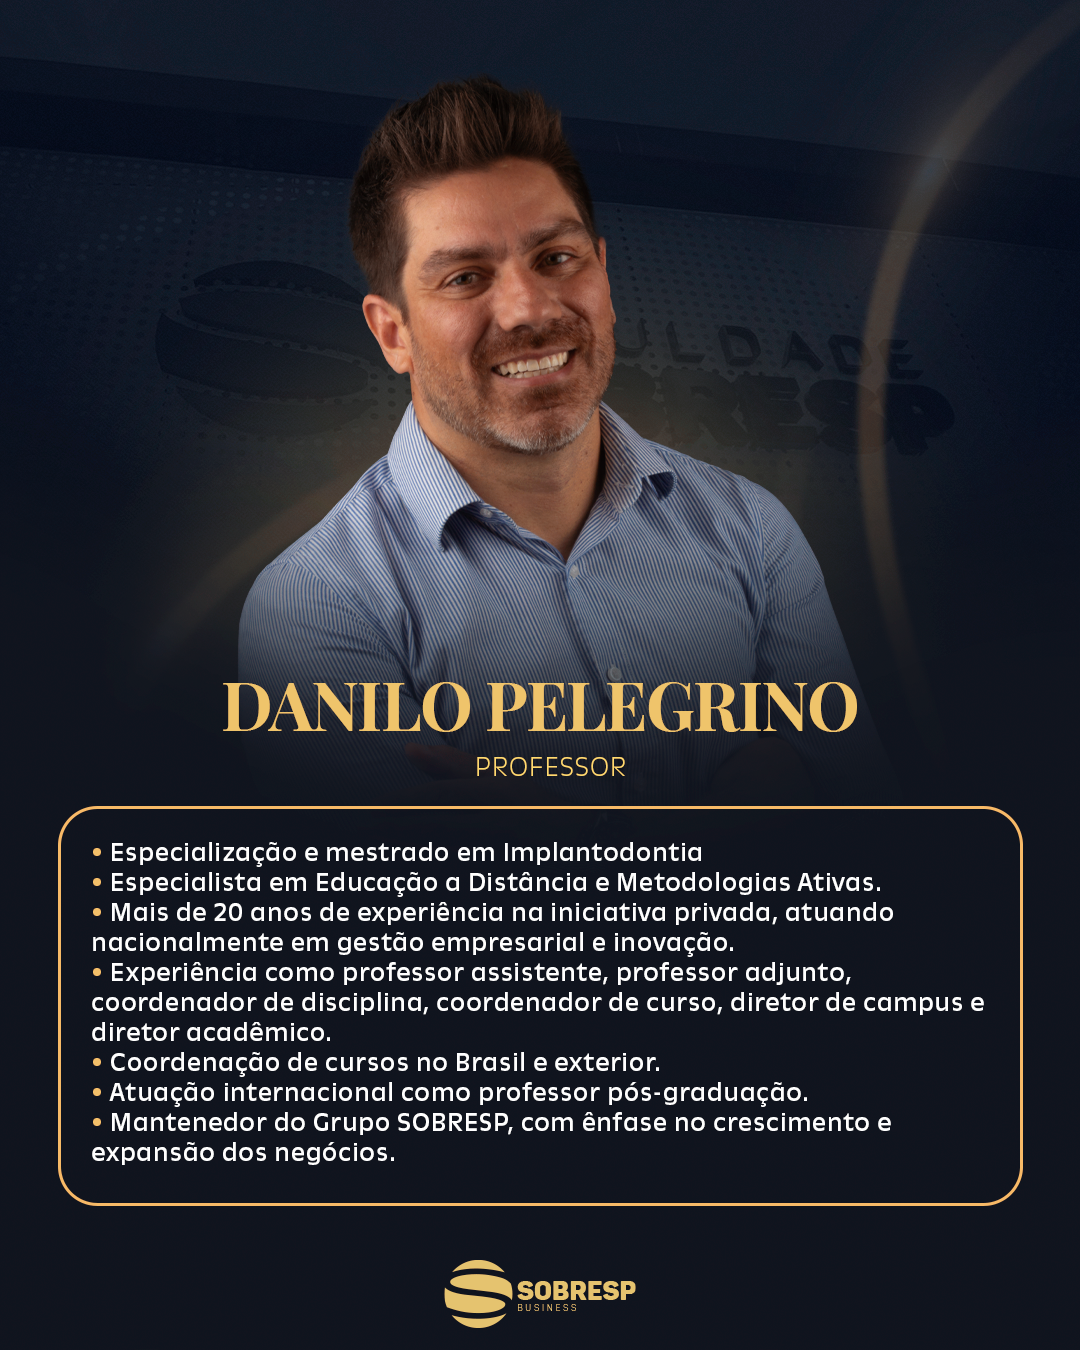 Professor Danilo Pelegrino